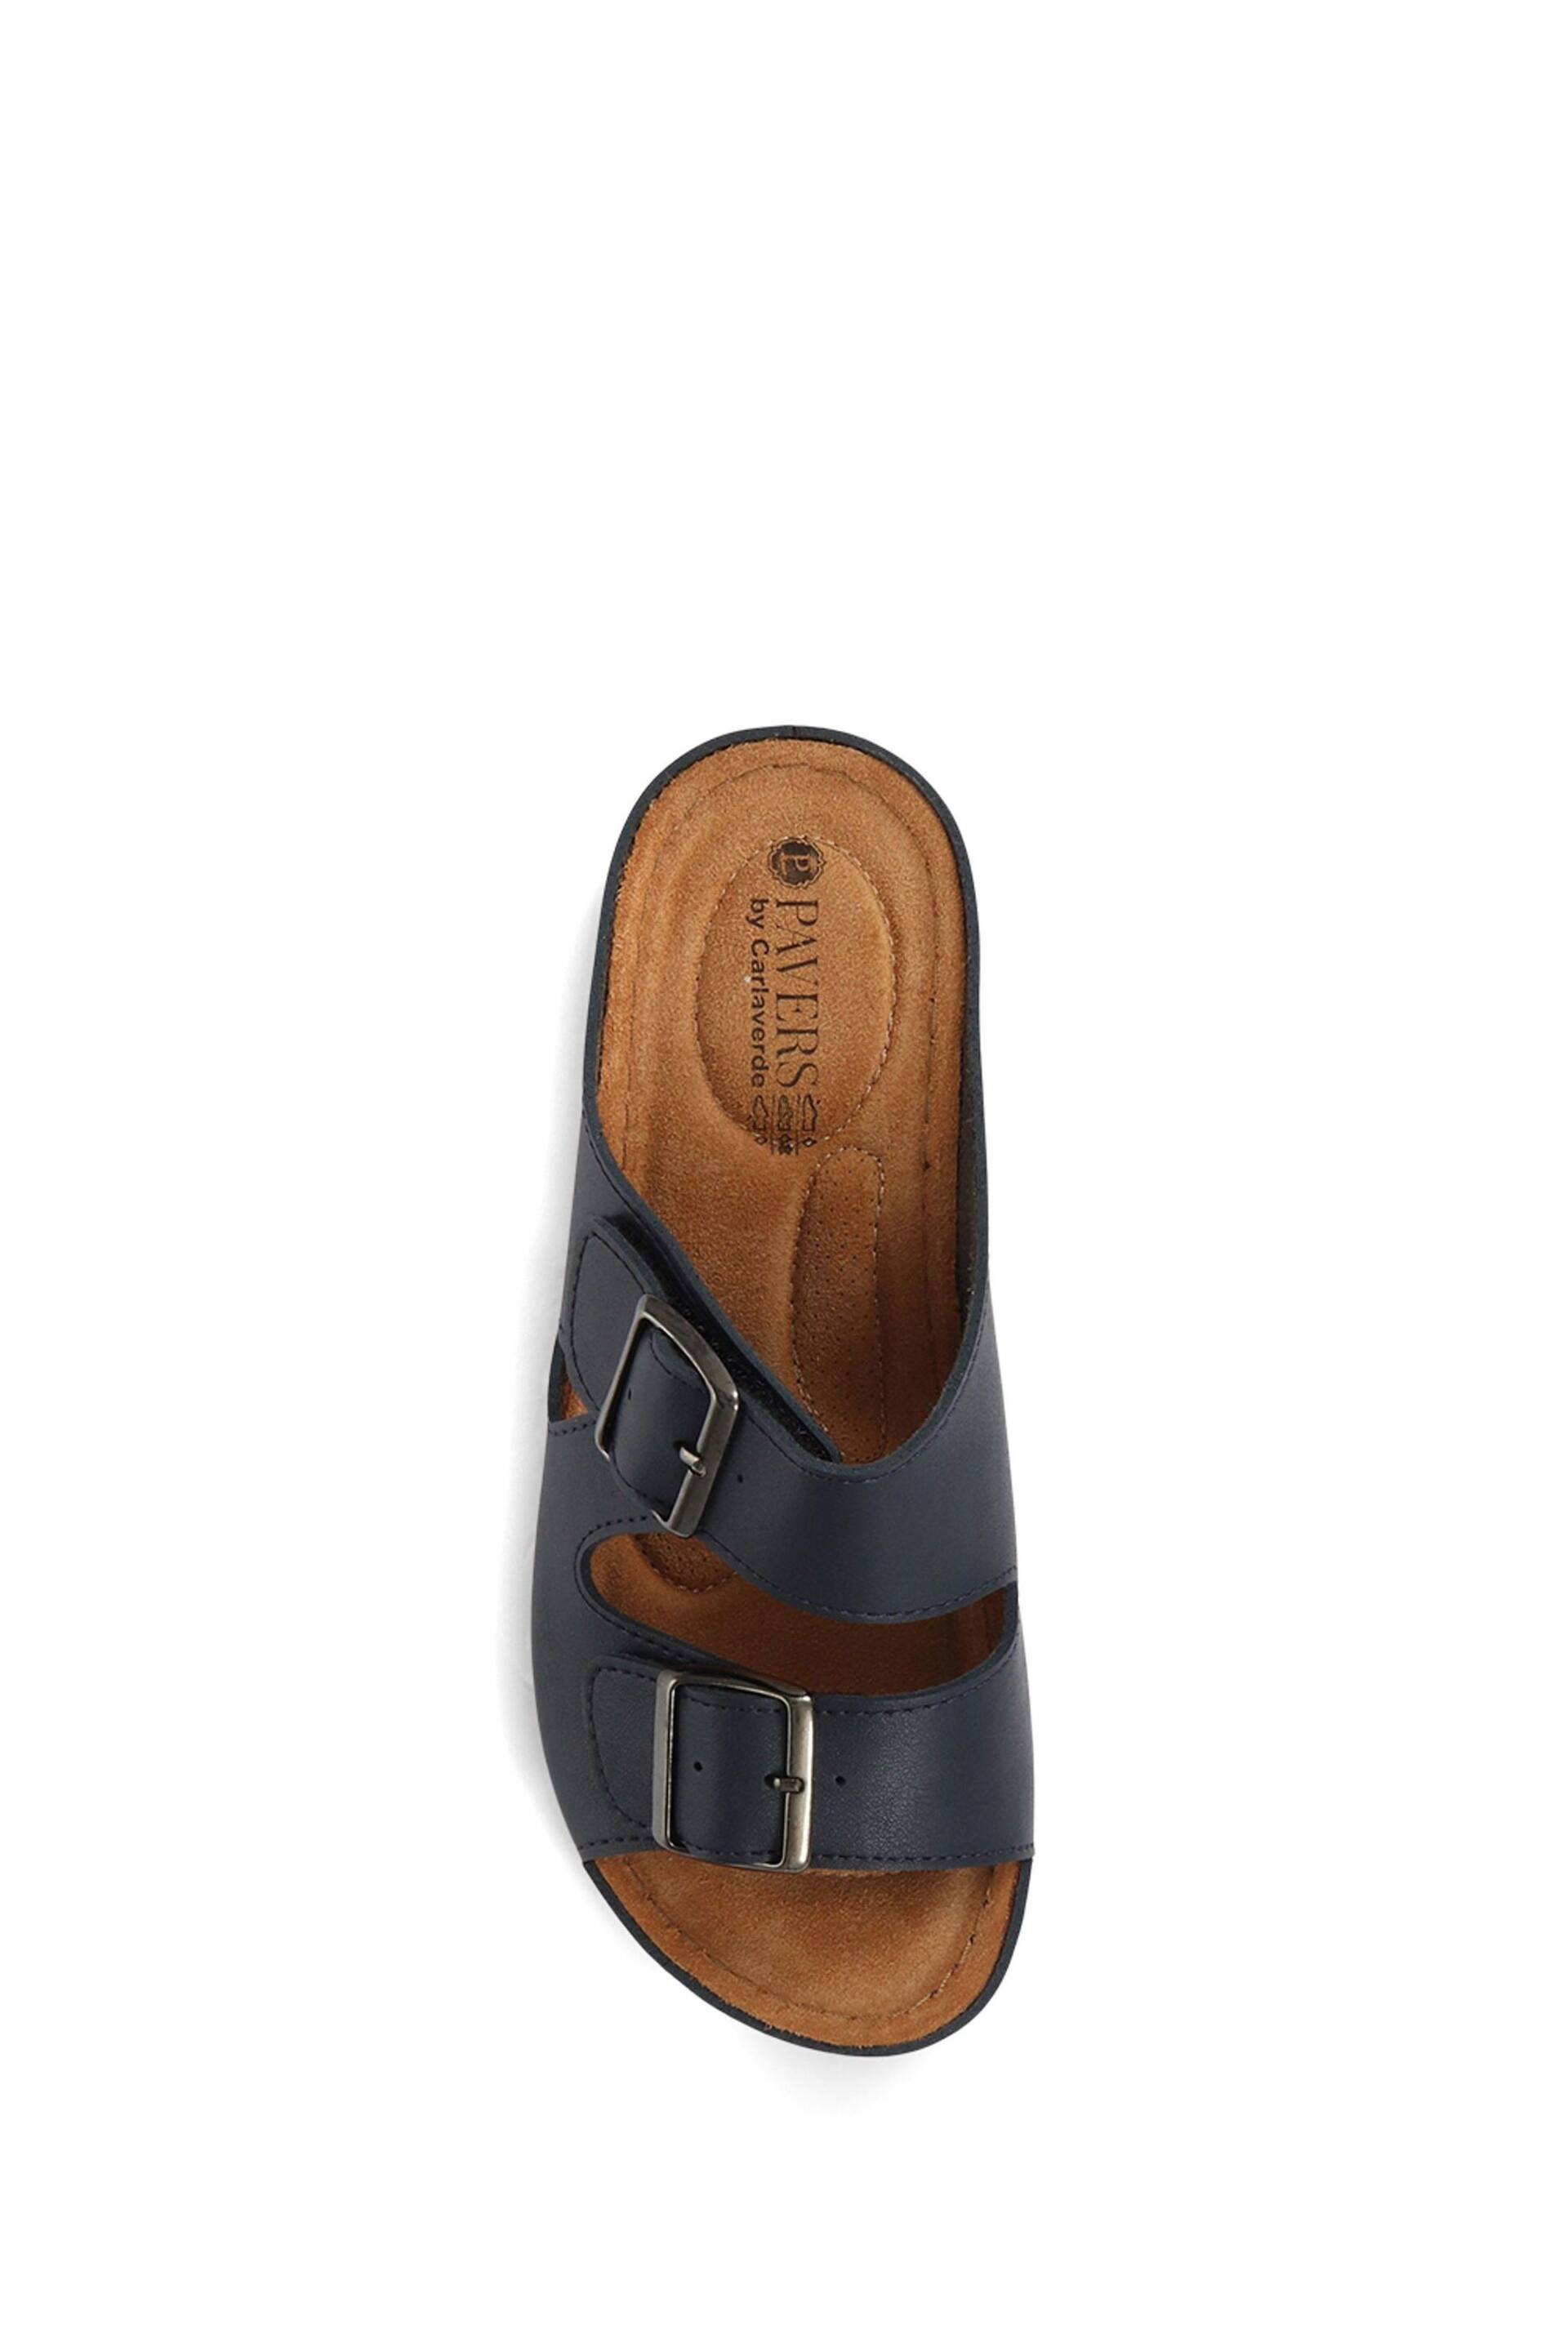 Pavers Adjustable Black Mule Sandals - Image 4 of 5